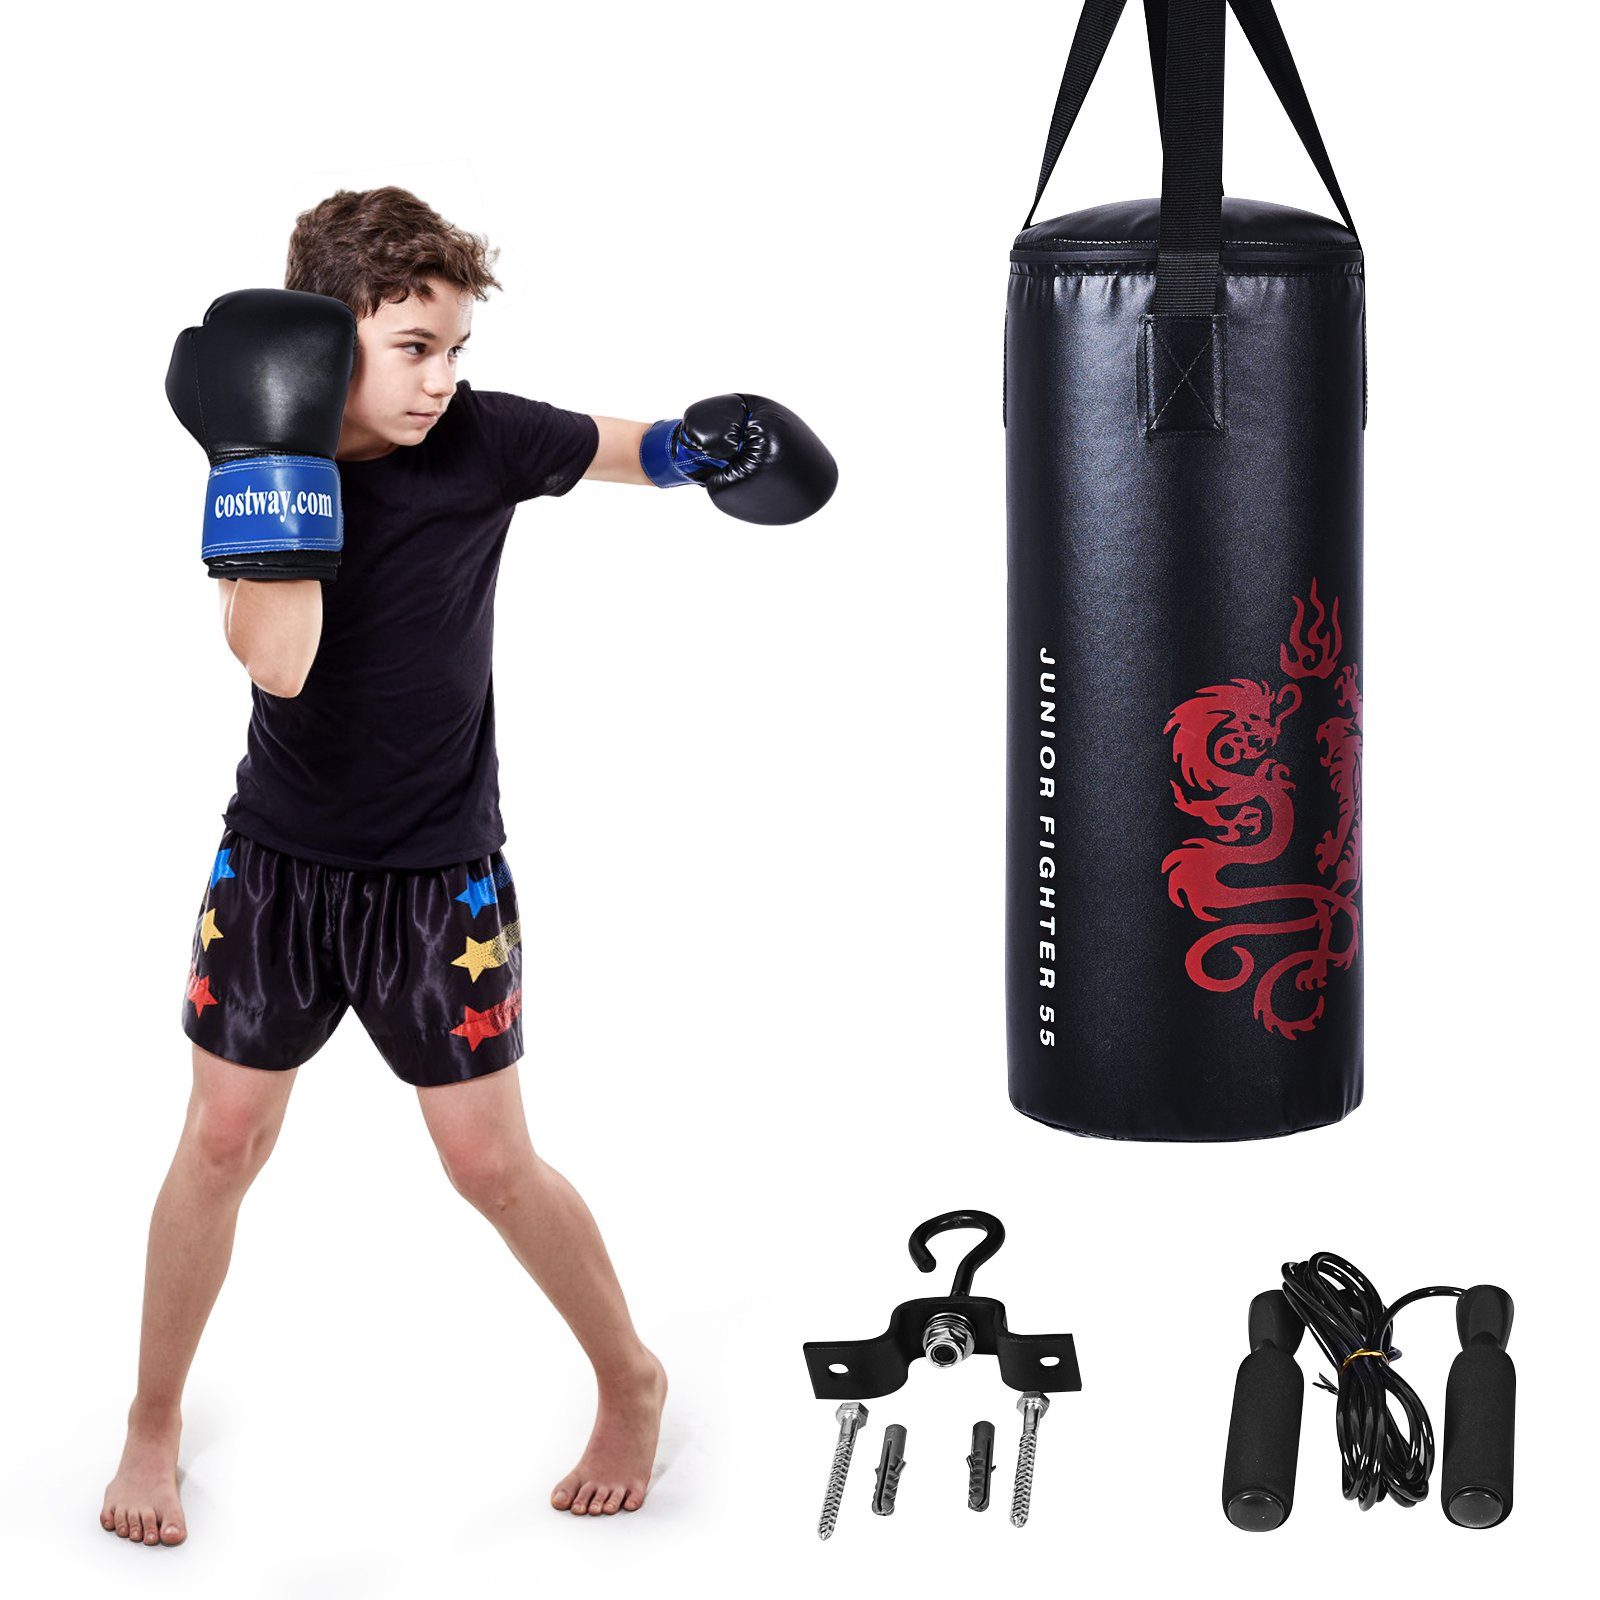 COSTWAY Boxsack »Punchingsack Set Punching Bag Boxing Bag«, mit 8oz  Boxhandschuhen, inkl. Deckenhaken und Springseil online kaufen | OTTO